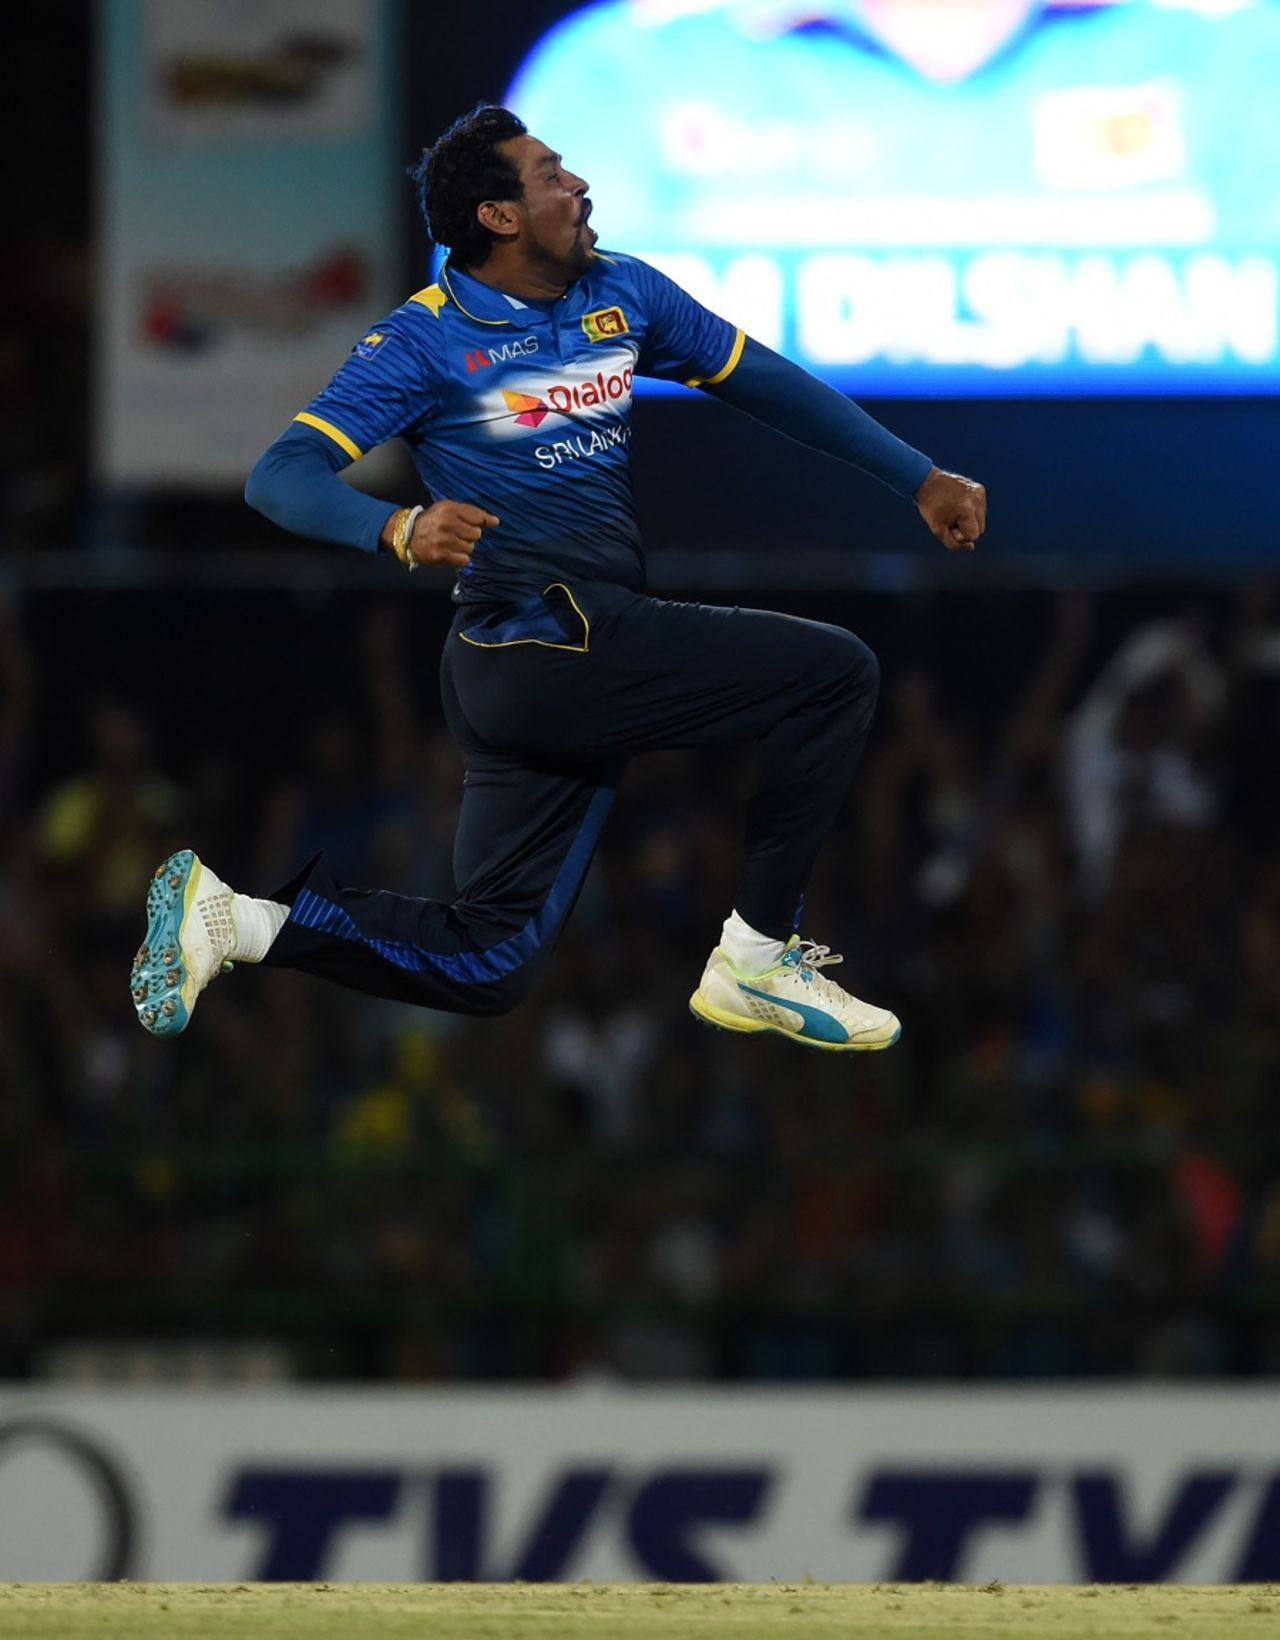 Tillakaratne Dilshan ended his international career with a wicket off his last ball, Sri Lanka v Australia, 2nd T20I, Colombo, September 9, 2016